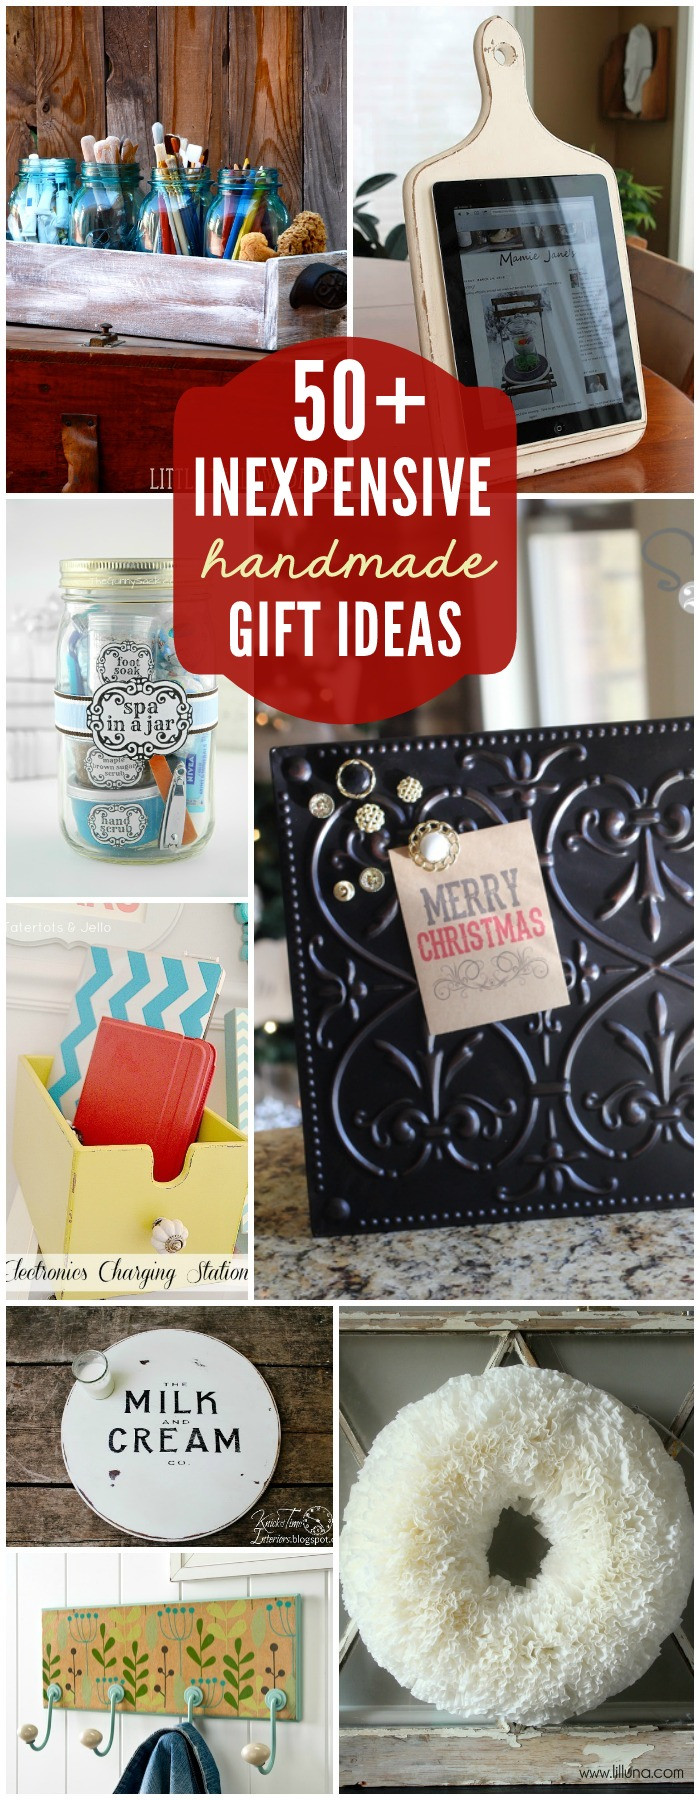 Easy Holiday Gift Ideas
 Easy DIY Gift Ideas